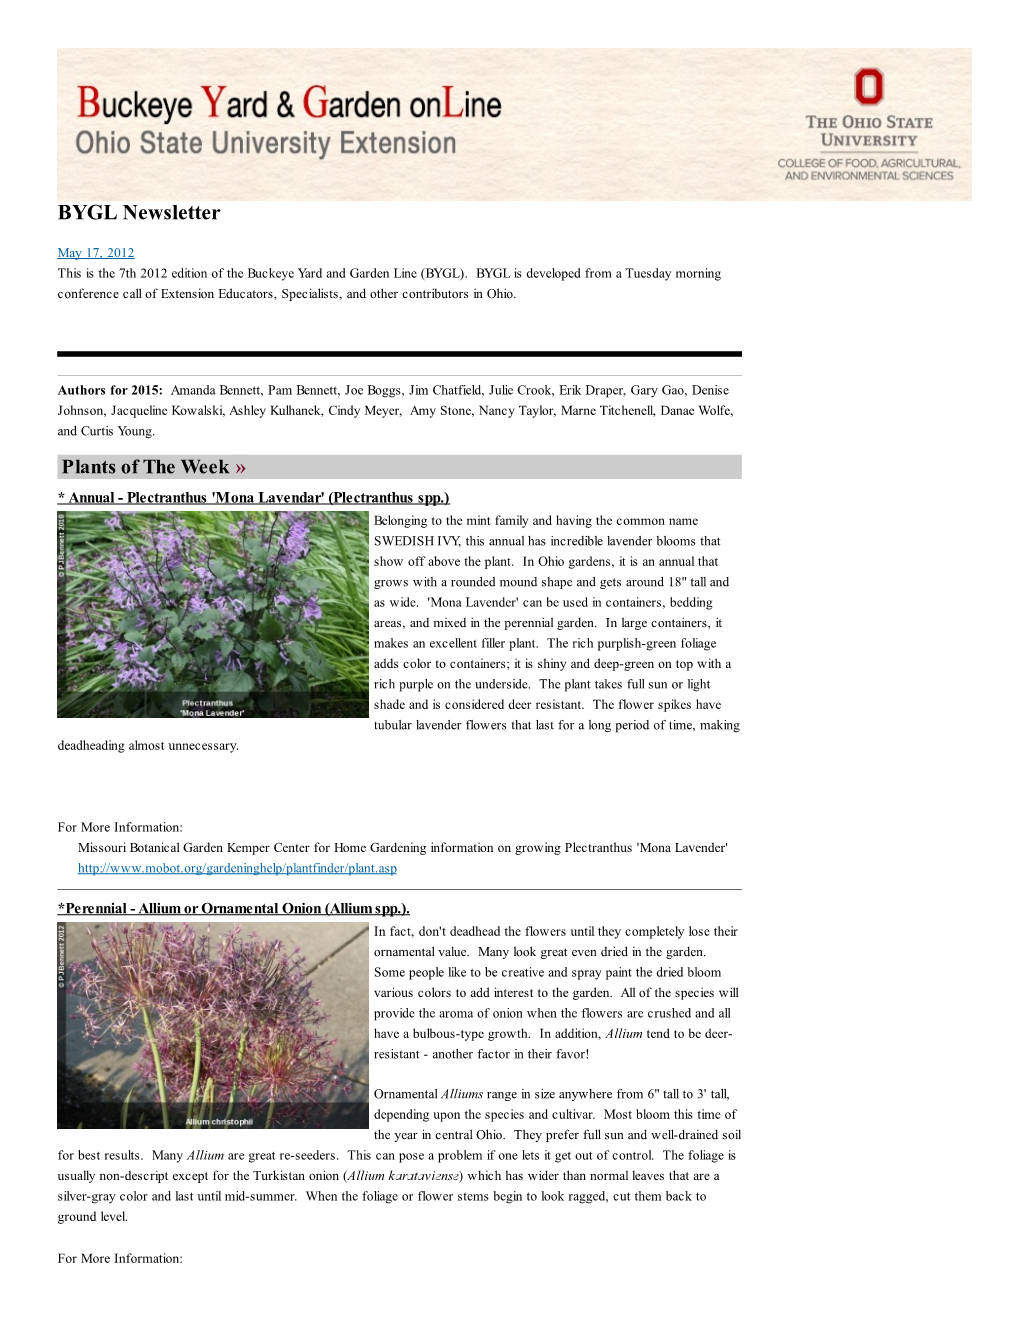 BYGL Newsletter | Buckeye Yard & Garden Online